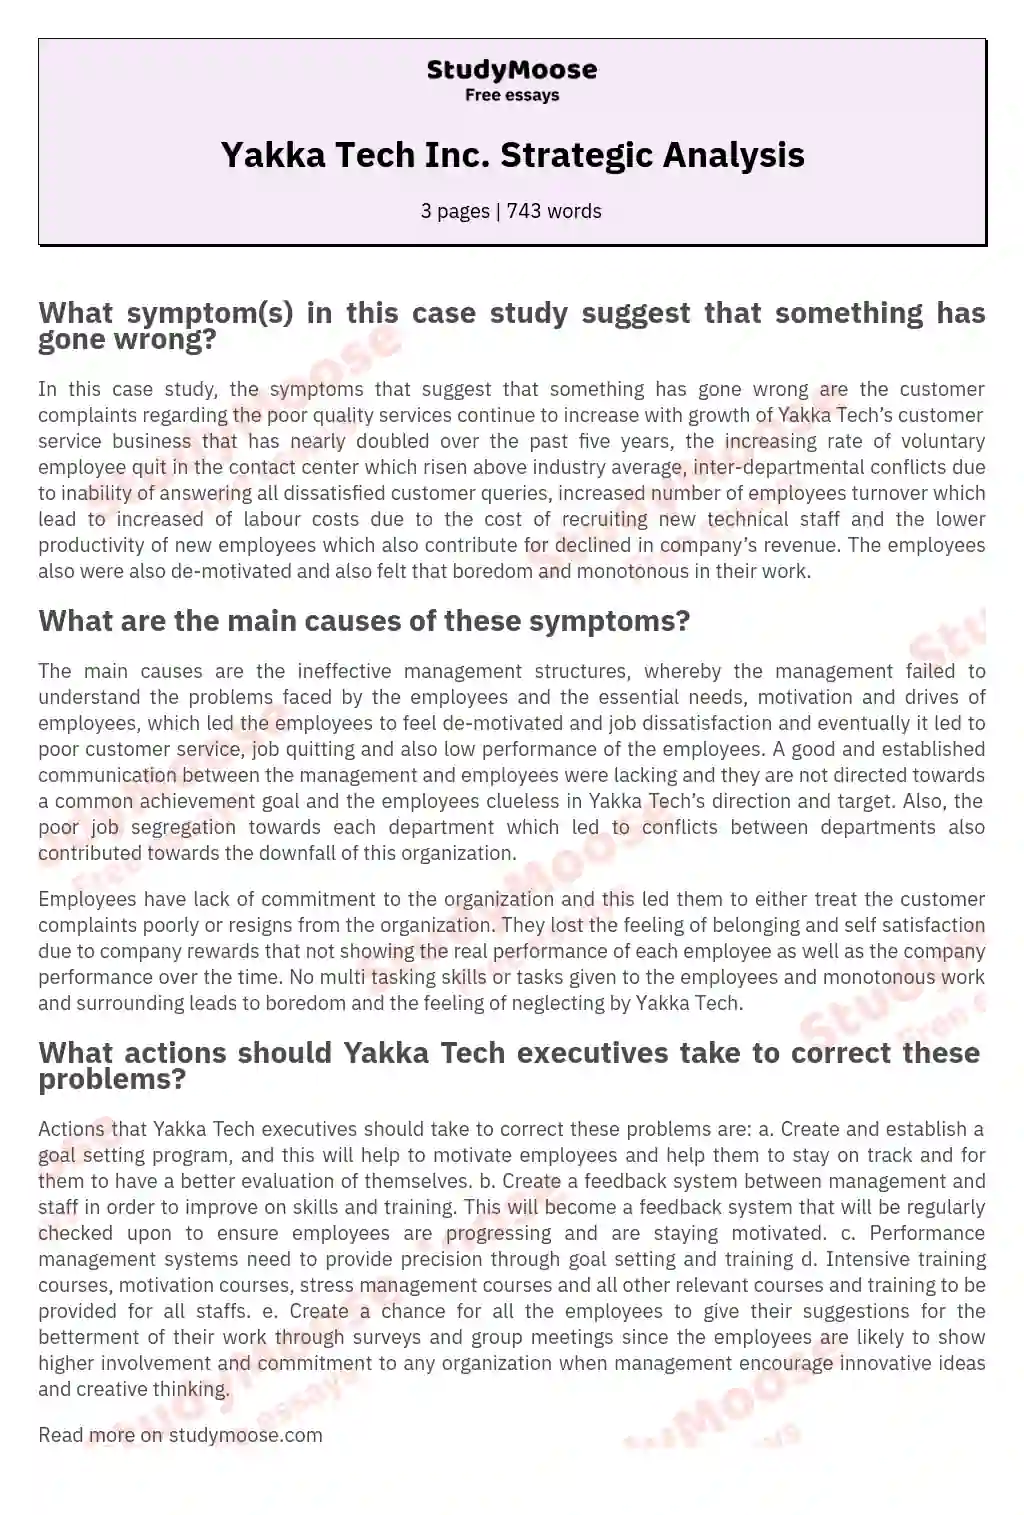 Yakka Tech Inc. Strategic Analysis essay